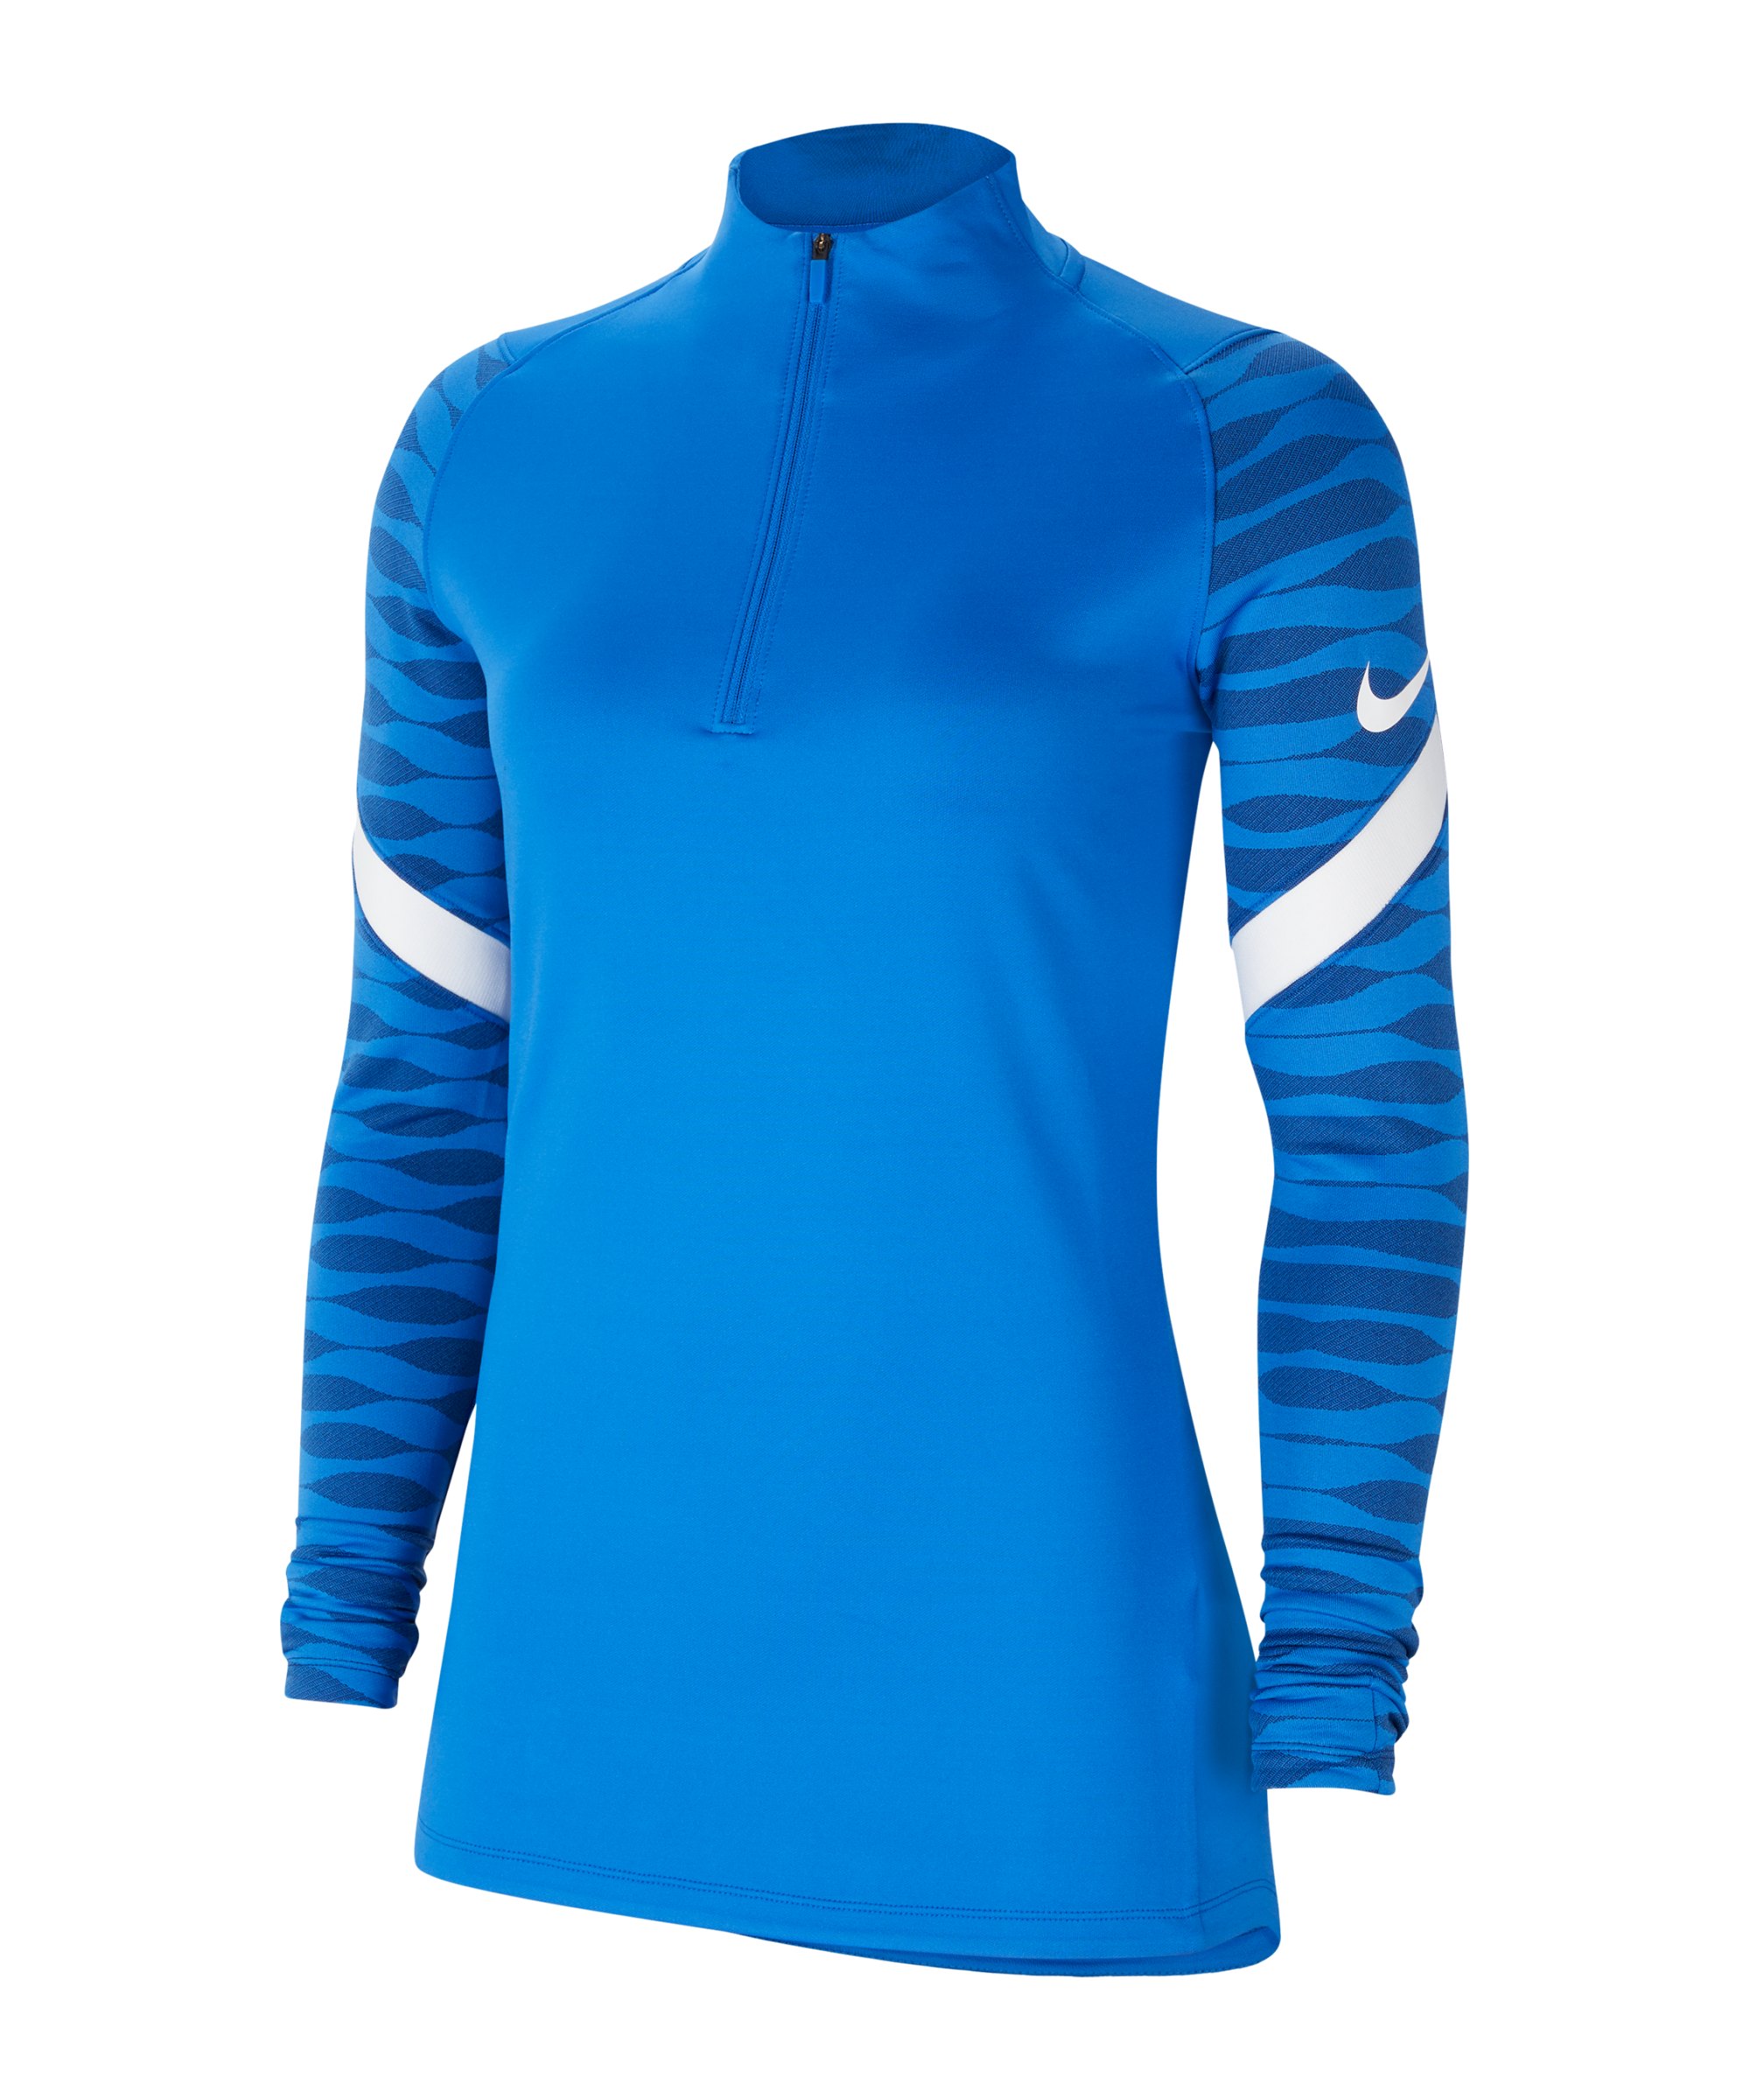 Nike Strike 21 Drill Top Damen Blau F463 - blau